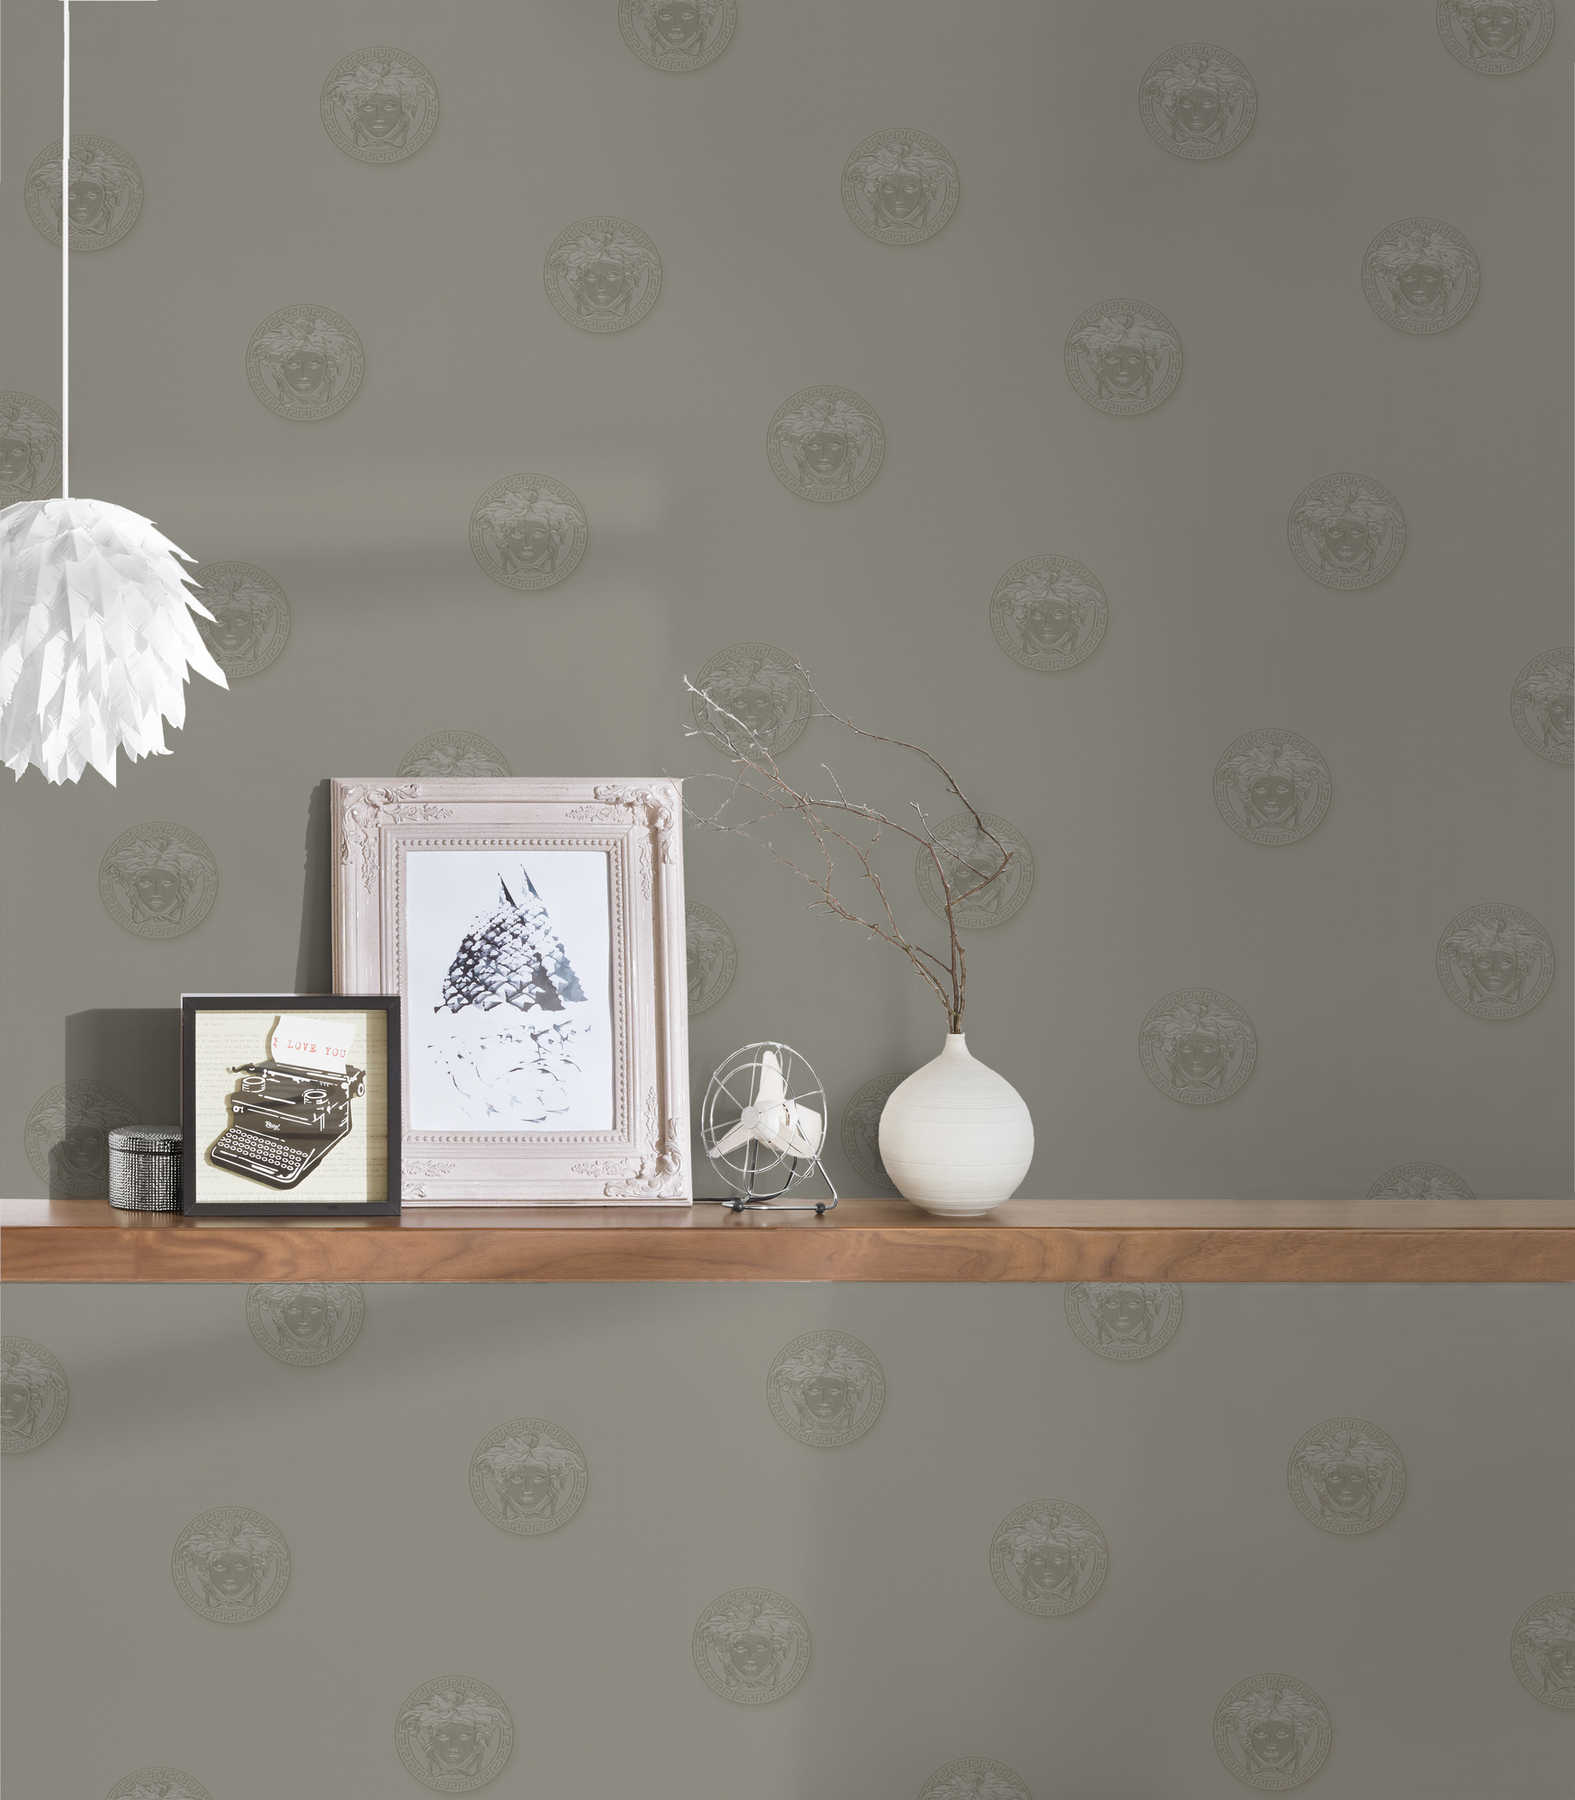             VERSACE wallpaper with Medusa embossed pattern - grey
        